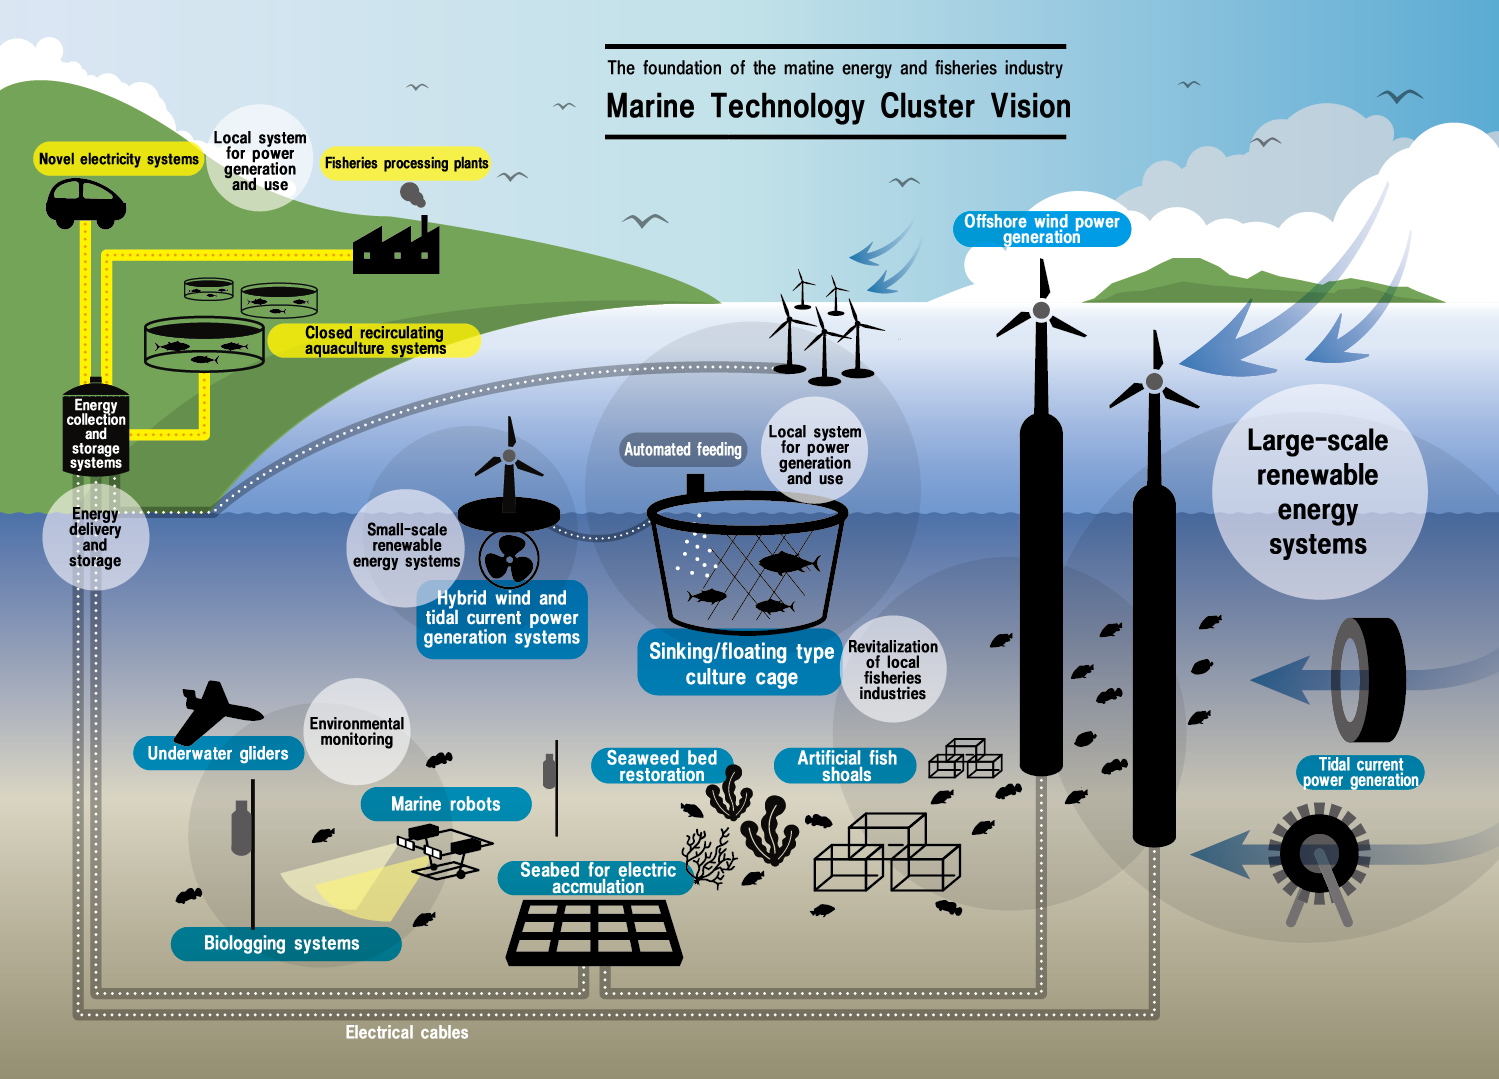 Marine Technology Cluster Vision